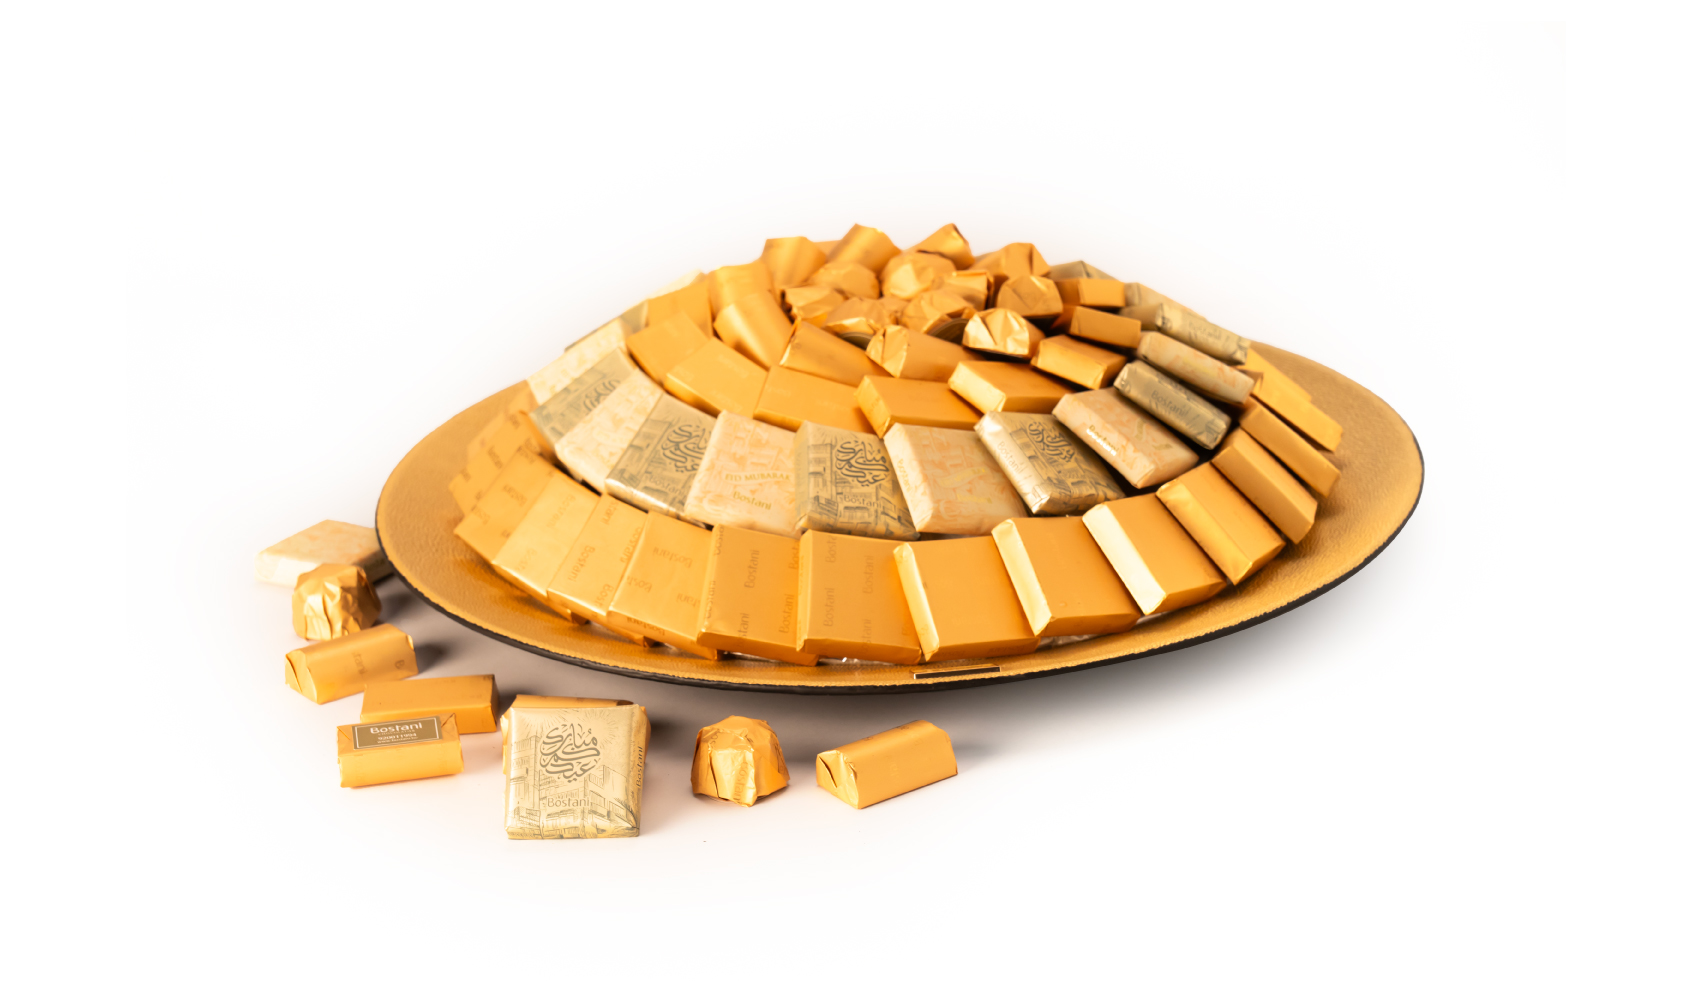 Fancy Gold Round Leathered Tray With Kol 3am w Antom bkher Phrase 1300g